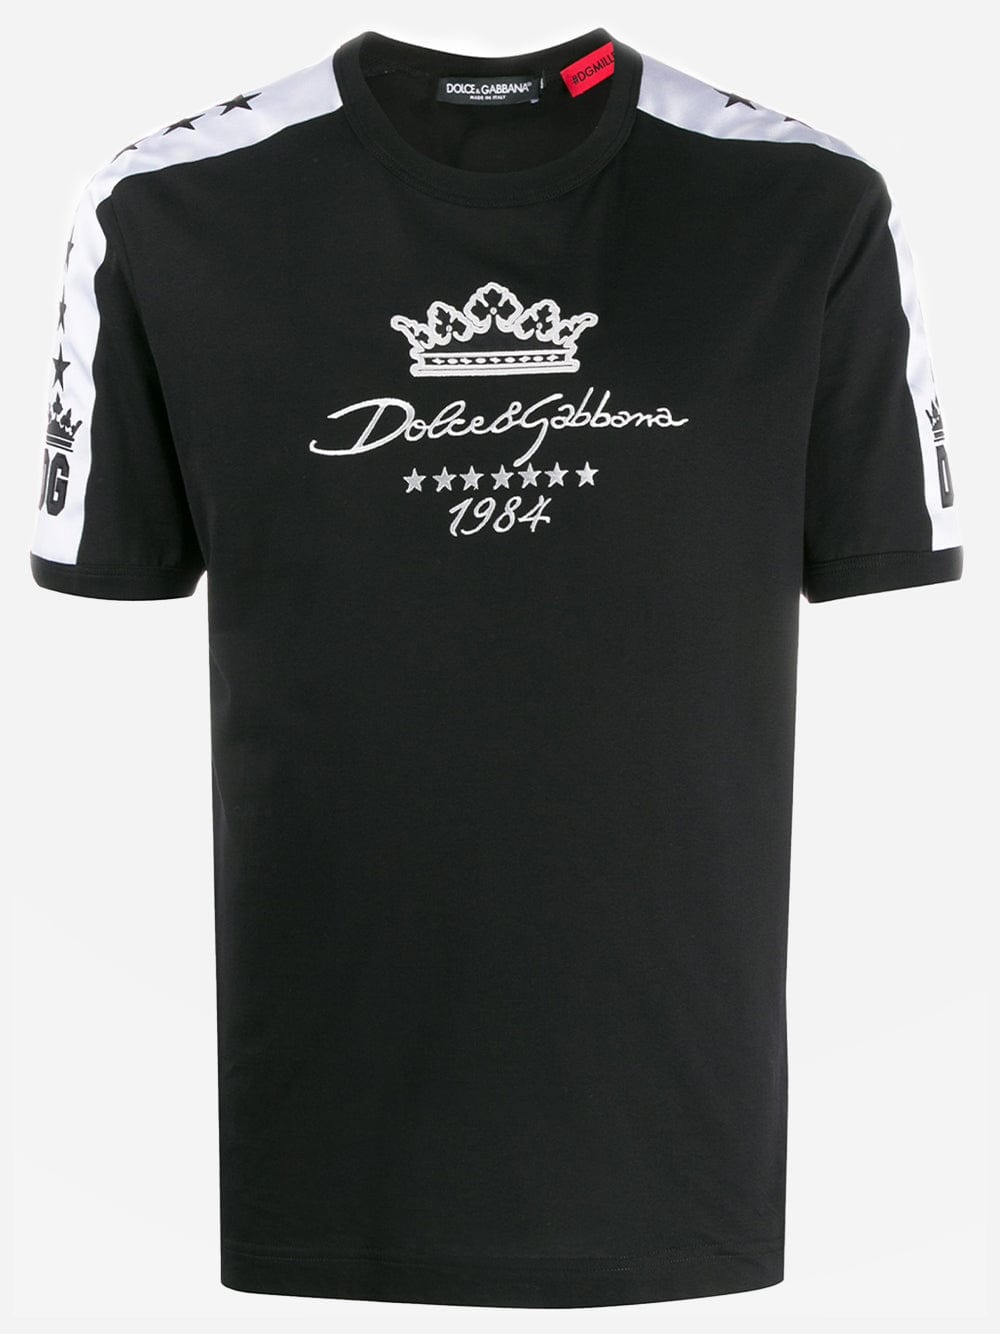 Dolce & Gabbana DG Since 1984 print T-Shirt